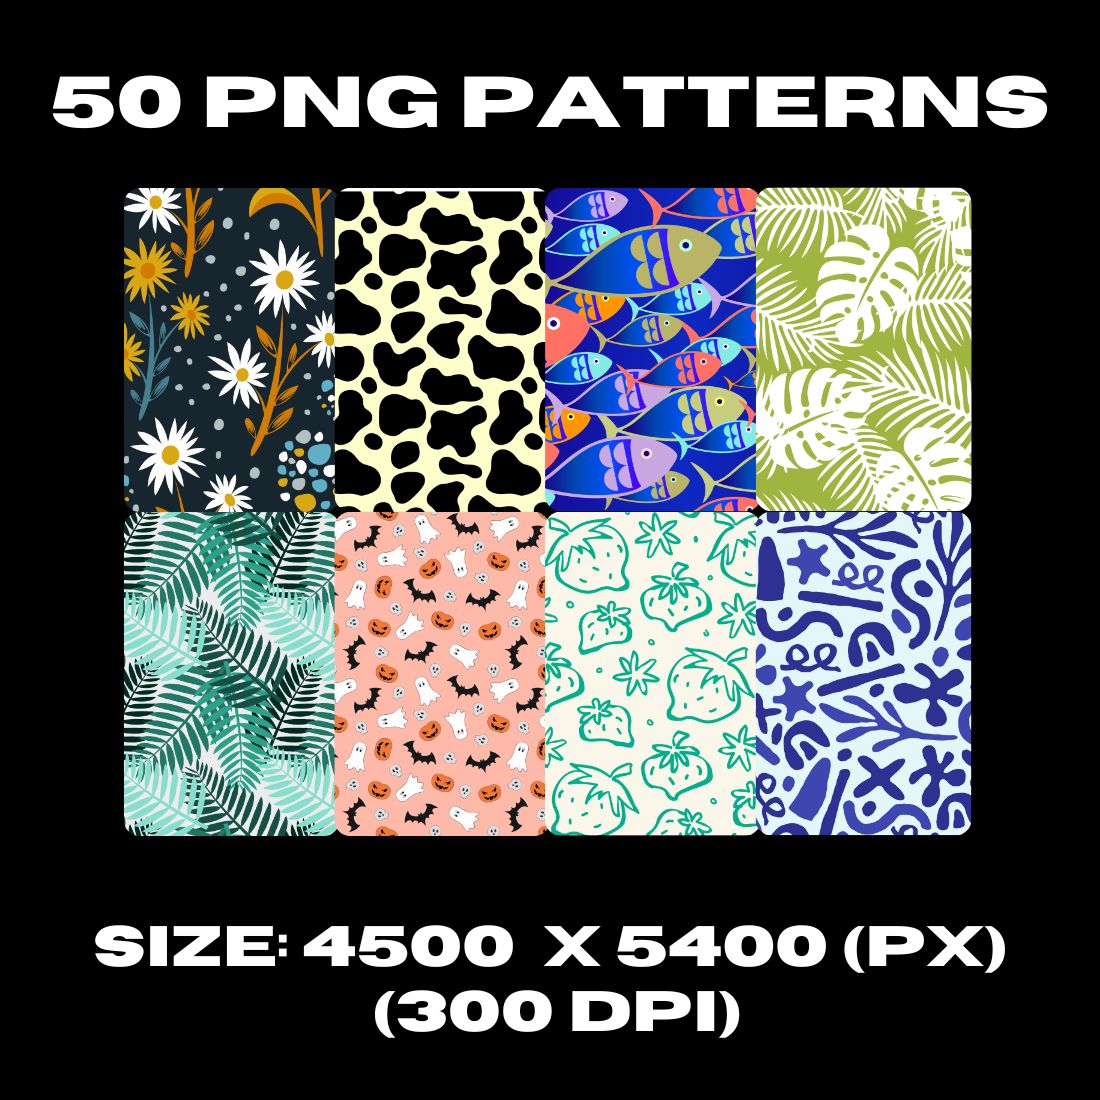 50 png patterns 300 dpi 296